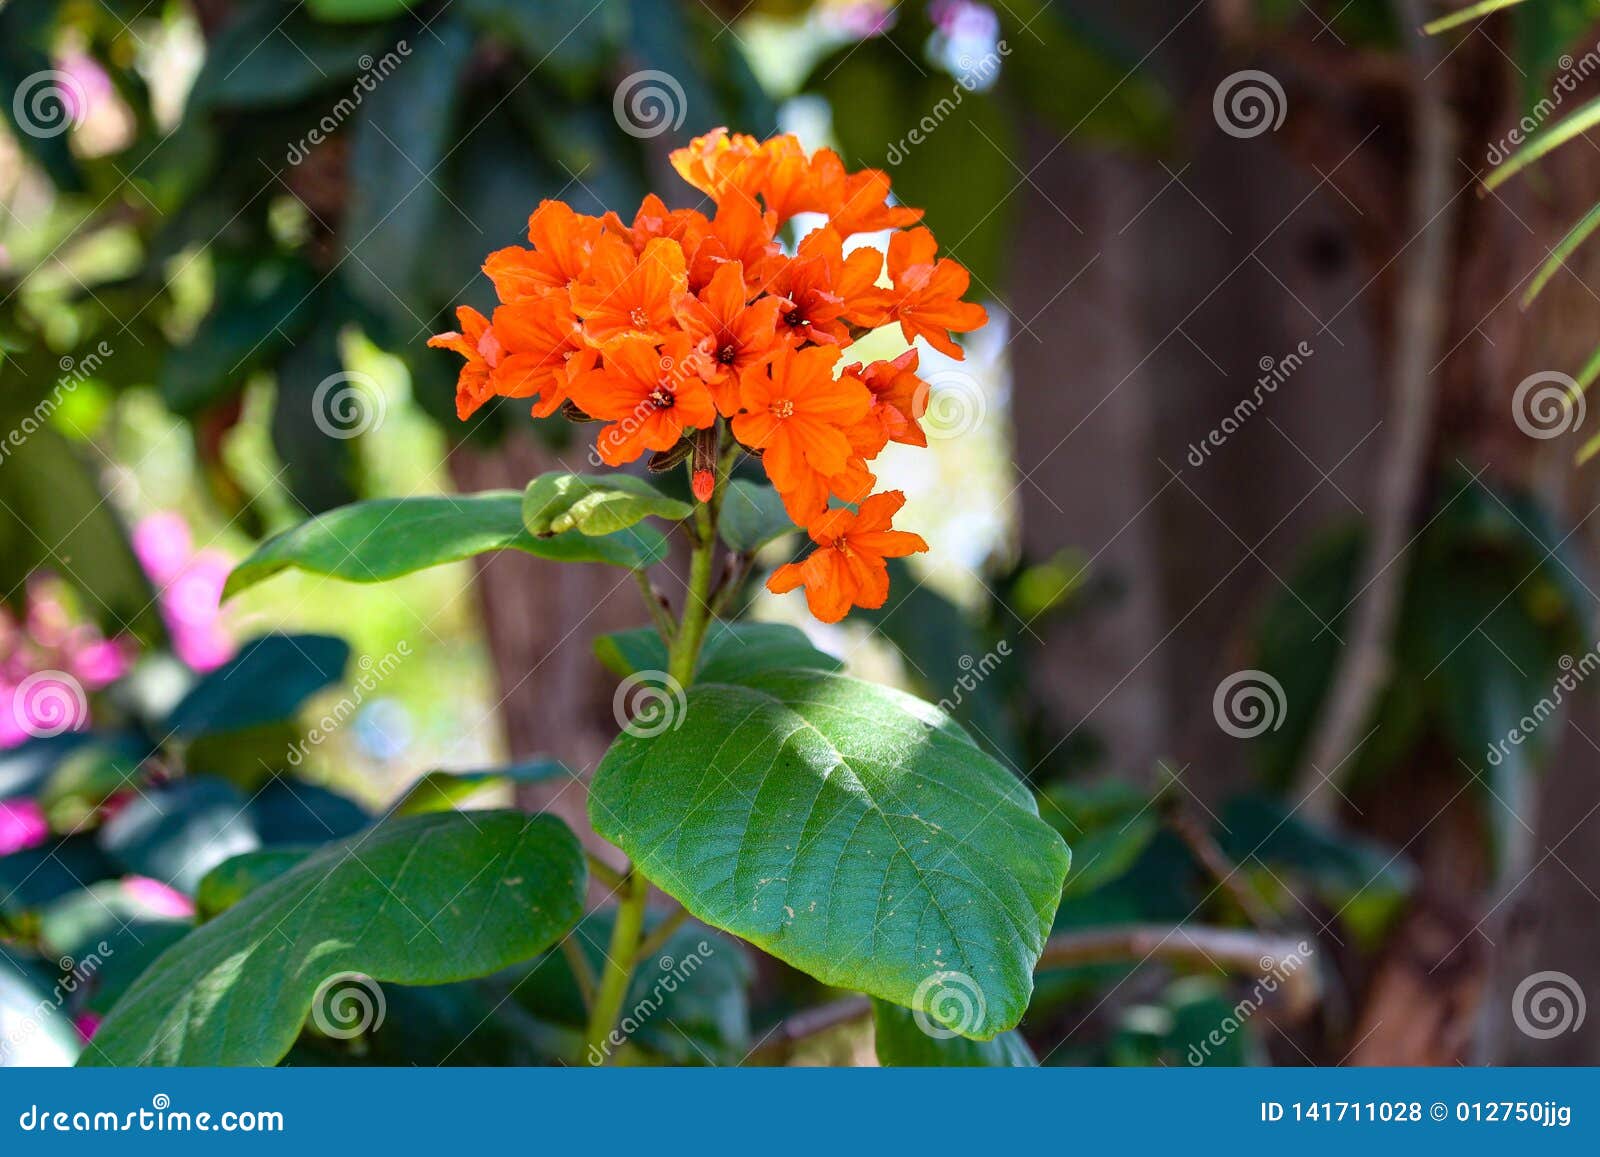 Geiger Tree  Bright Orange  Flowers  Stock Photo Image of 